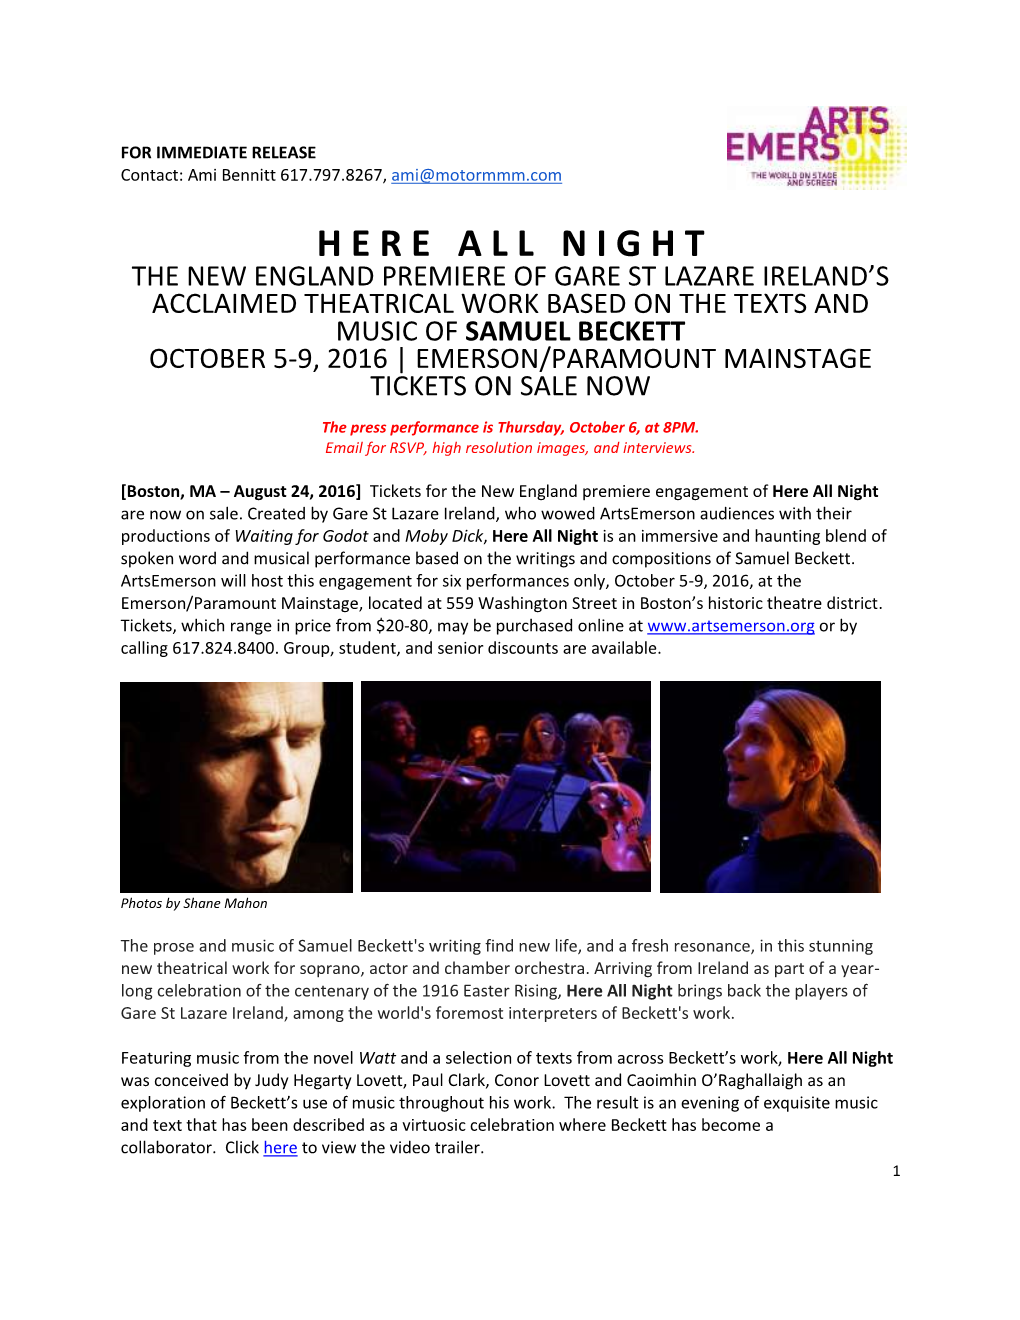 Samuel Beckett October 5-9, 2016 | Emerson/Paramount Mainstage Tickets on Sale Now